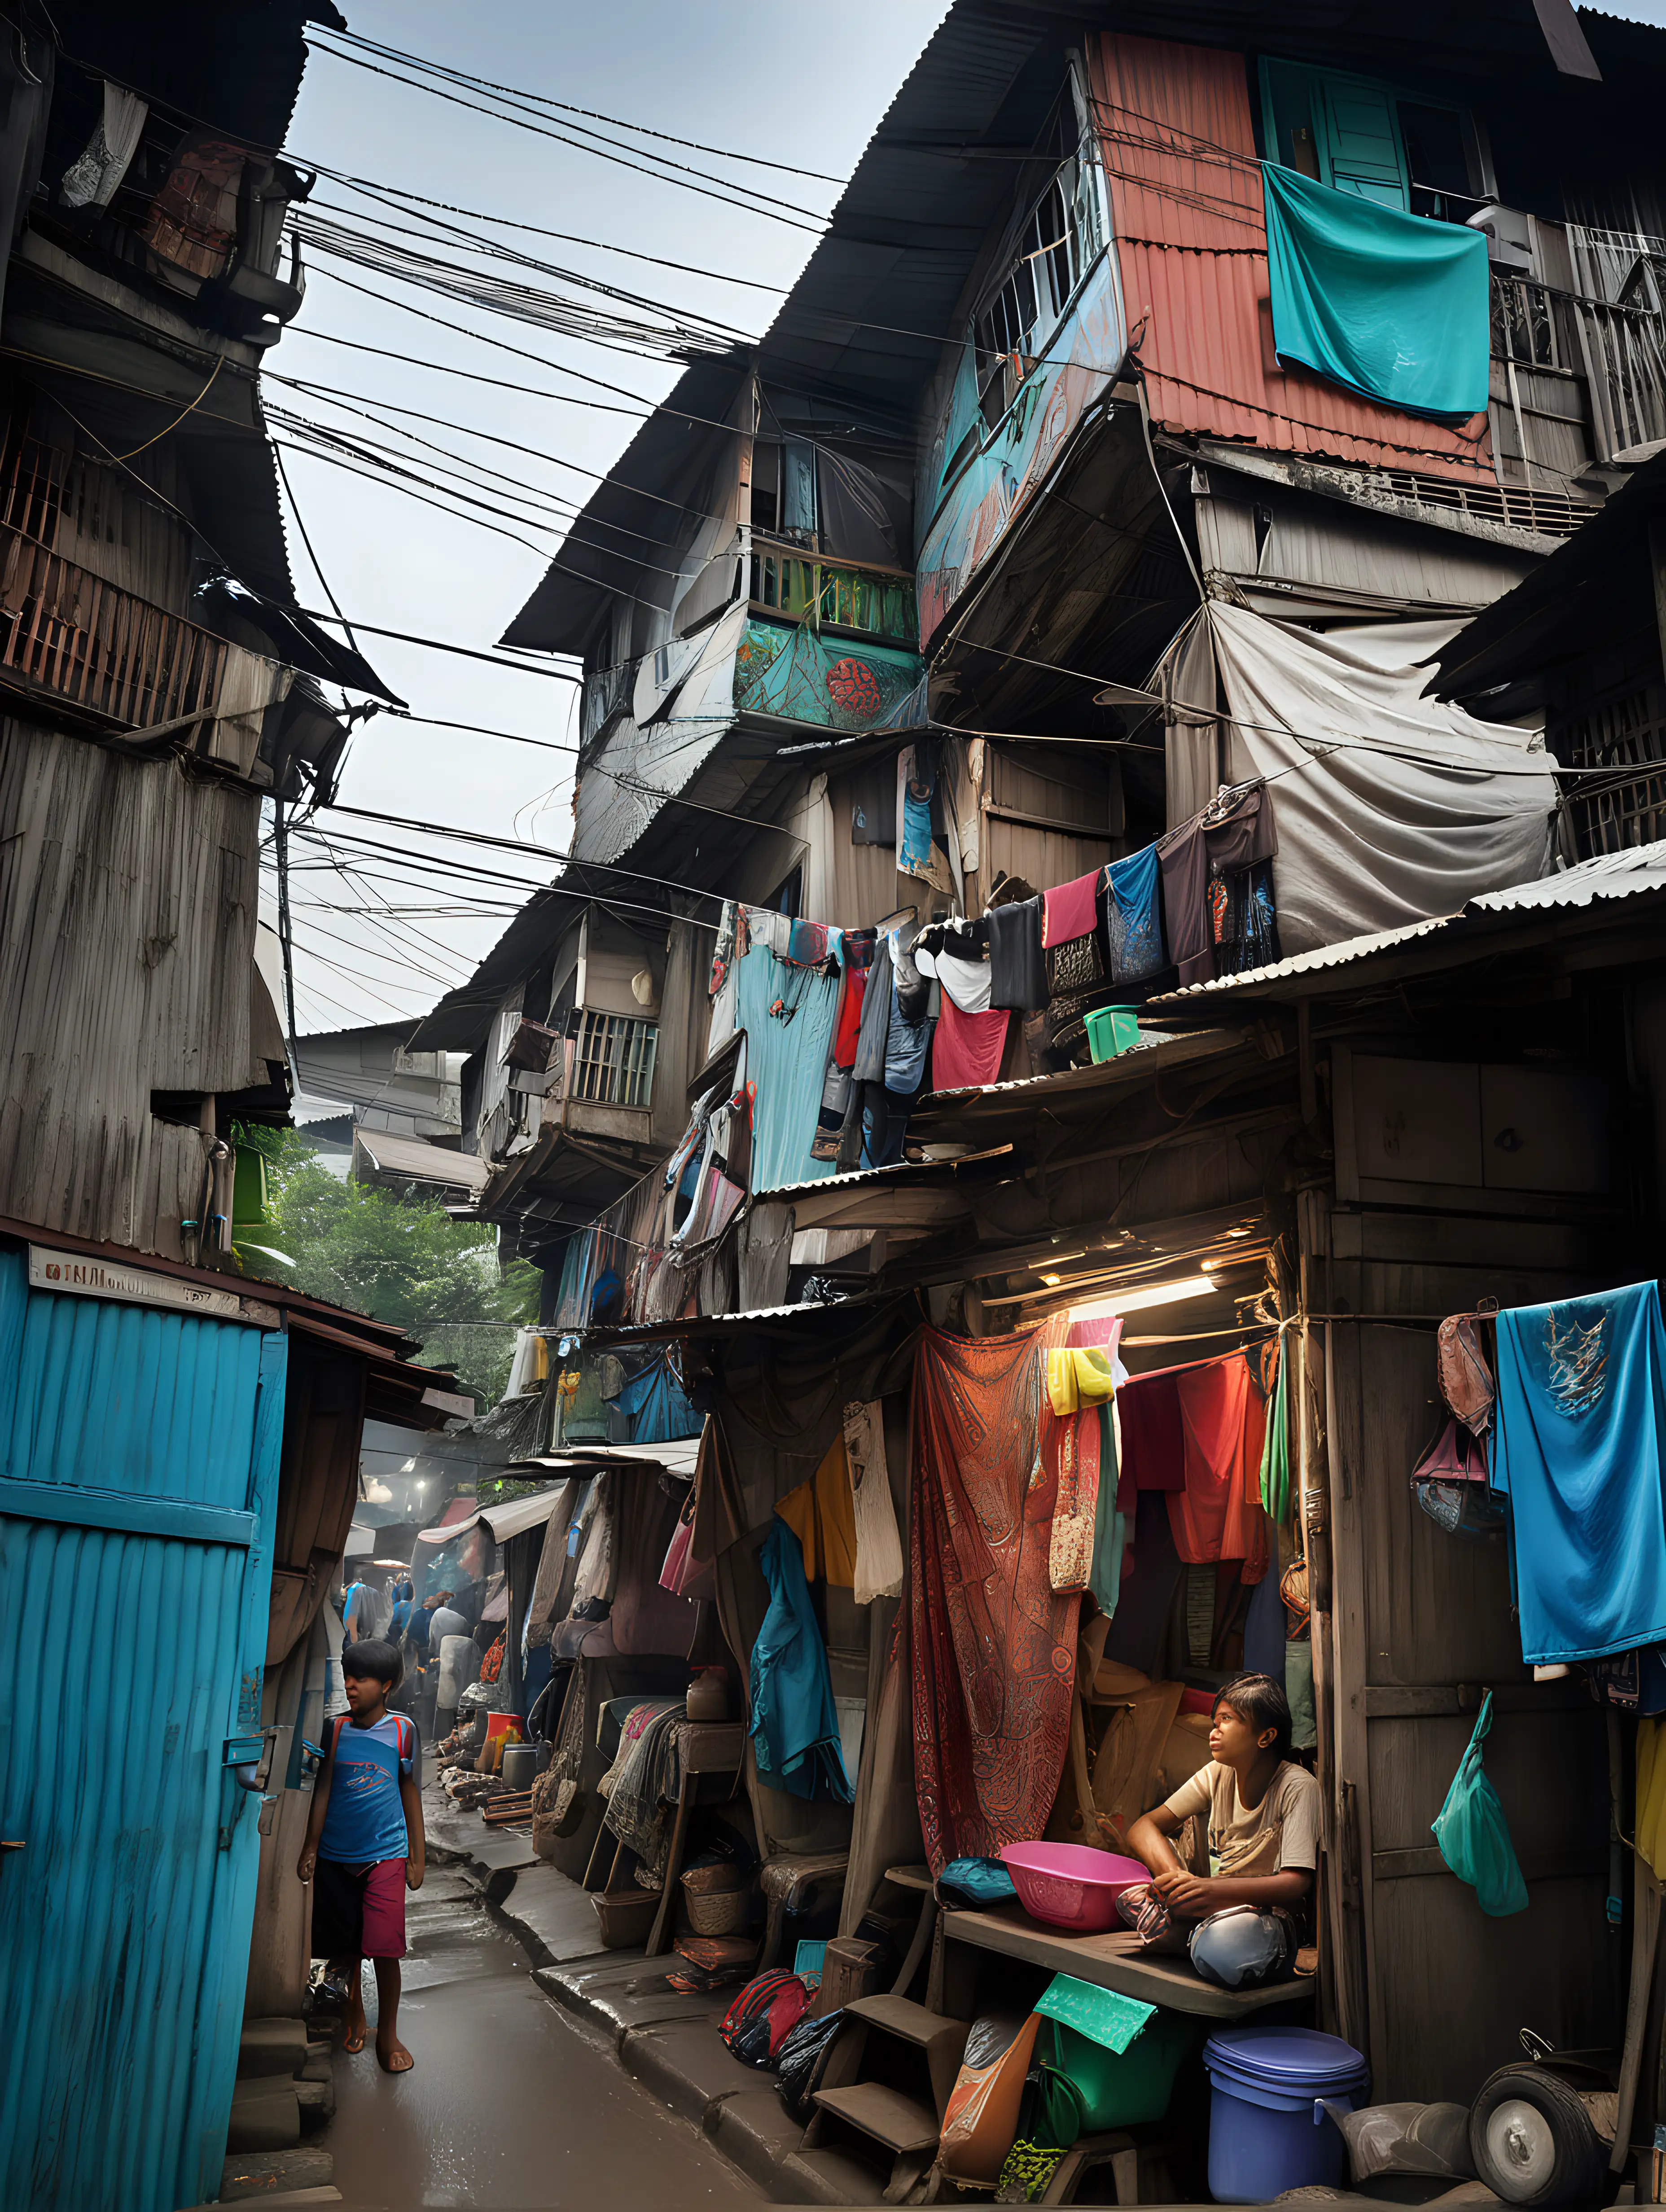 Vibrant Community Life in Jakartas Urban Slum Resilience Amidst Adversity